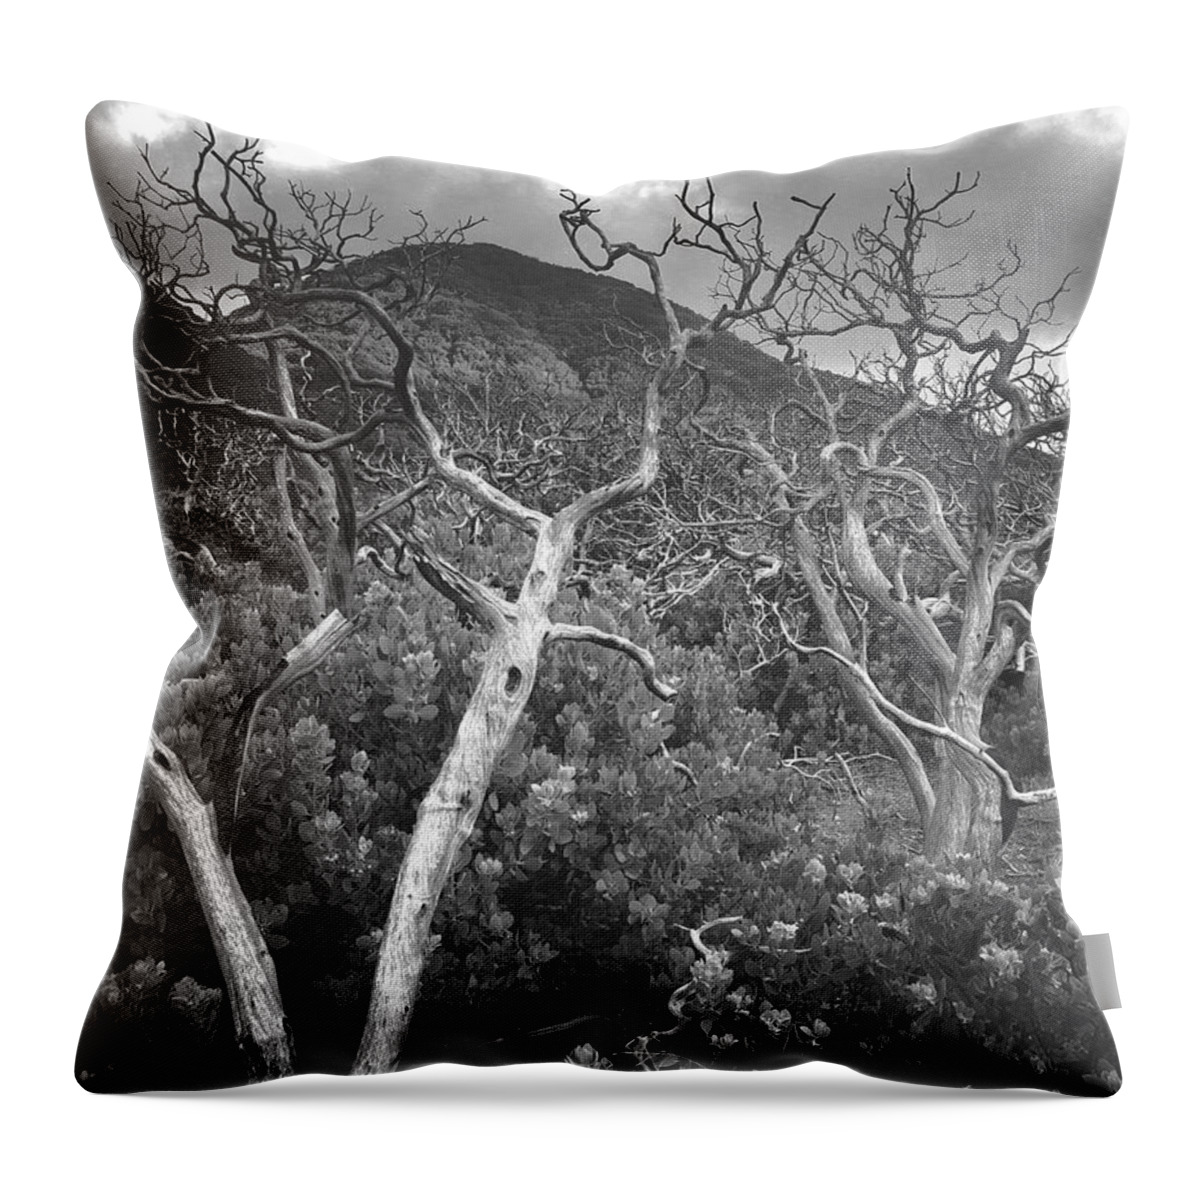 Mist Throw Pillow featuring the digital art Driftwood by Kevyn Bashore